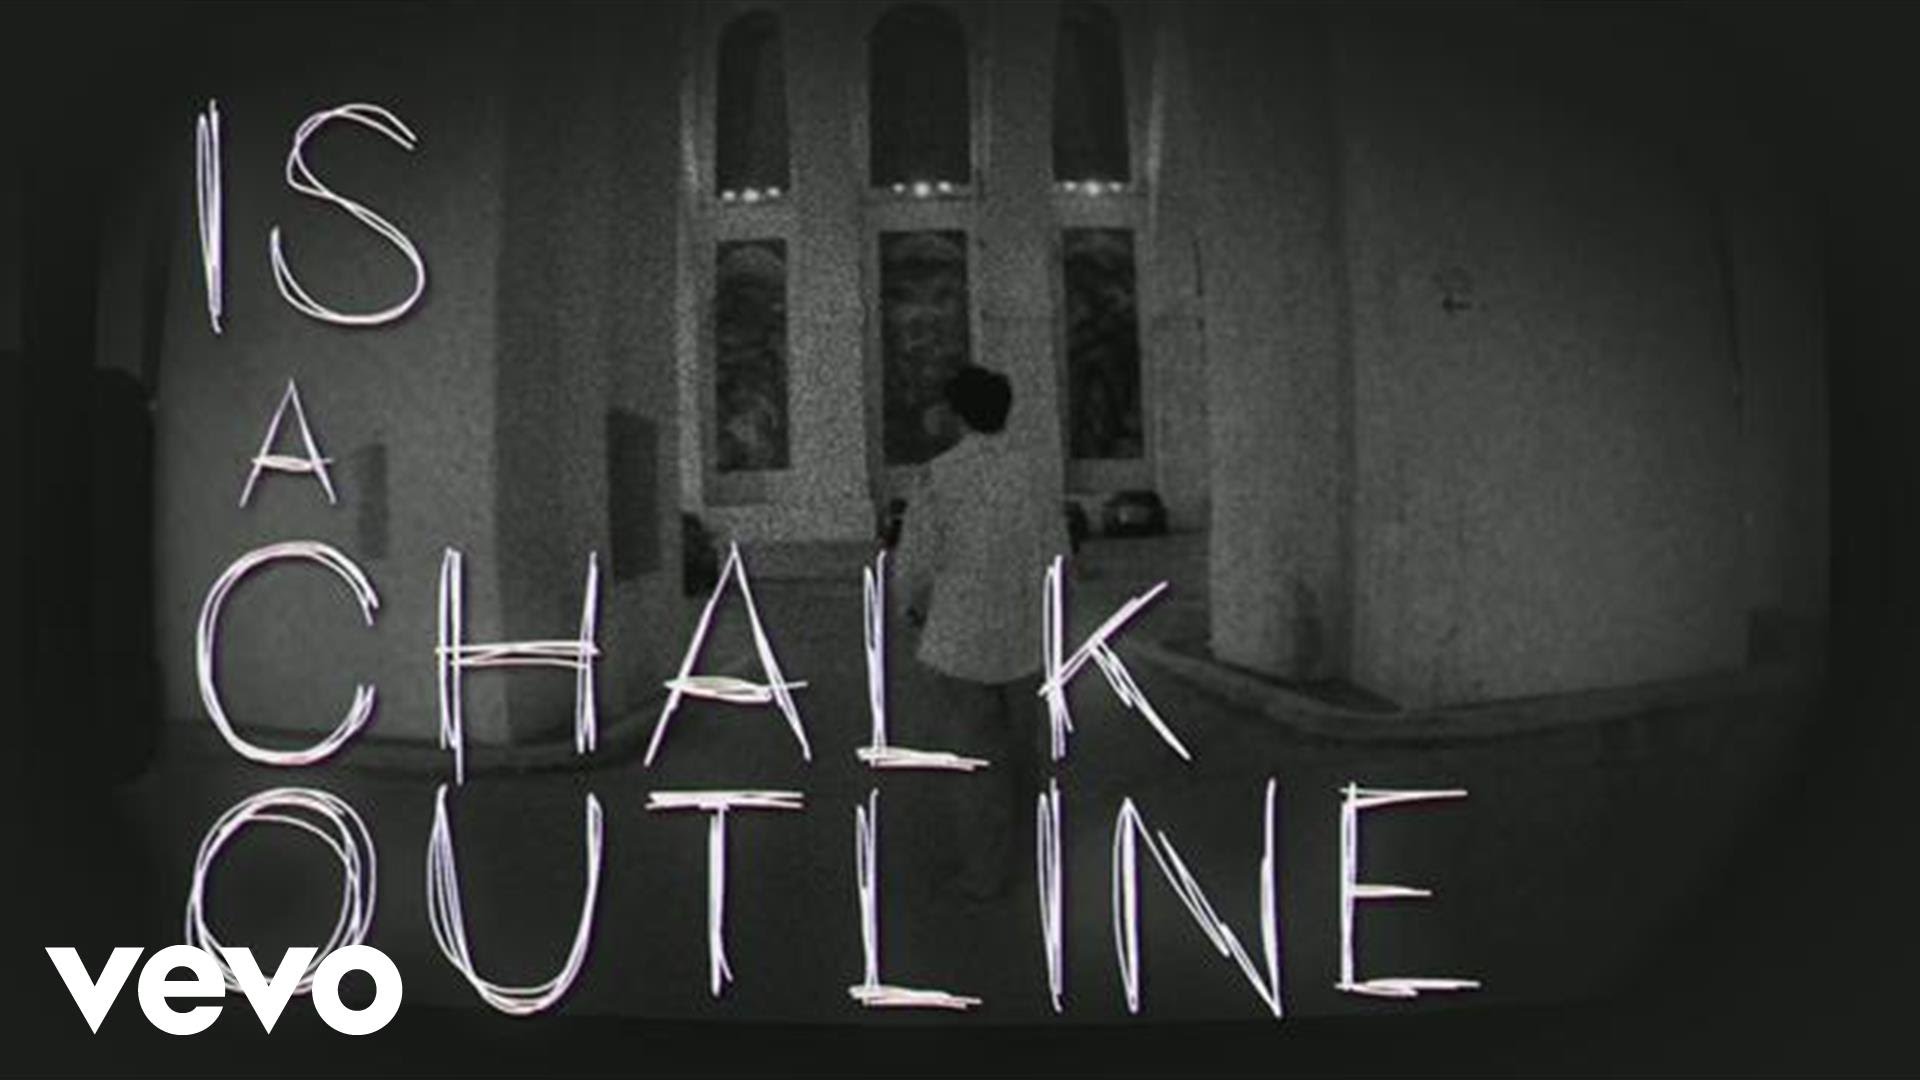 Three Days Grace – Chalk Outline